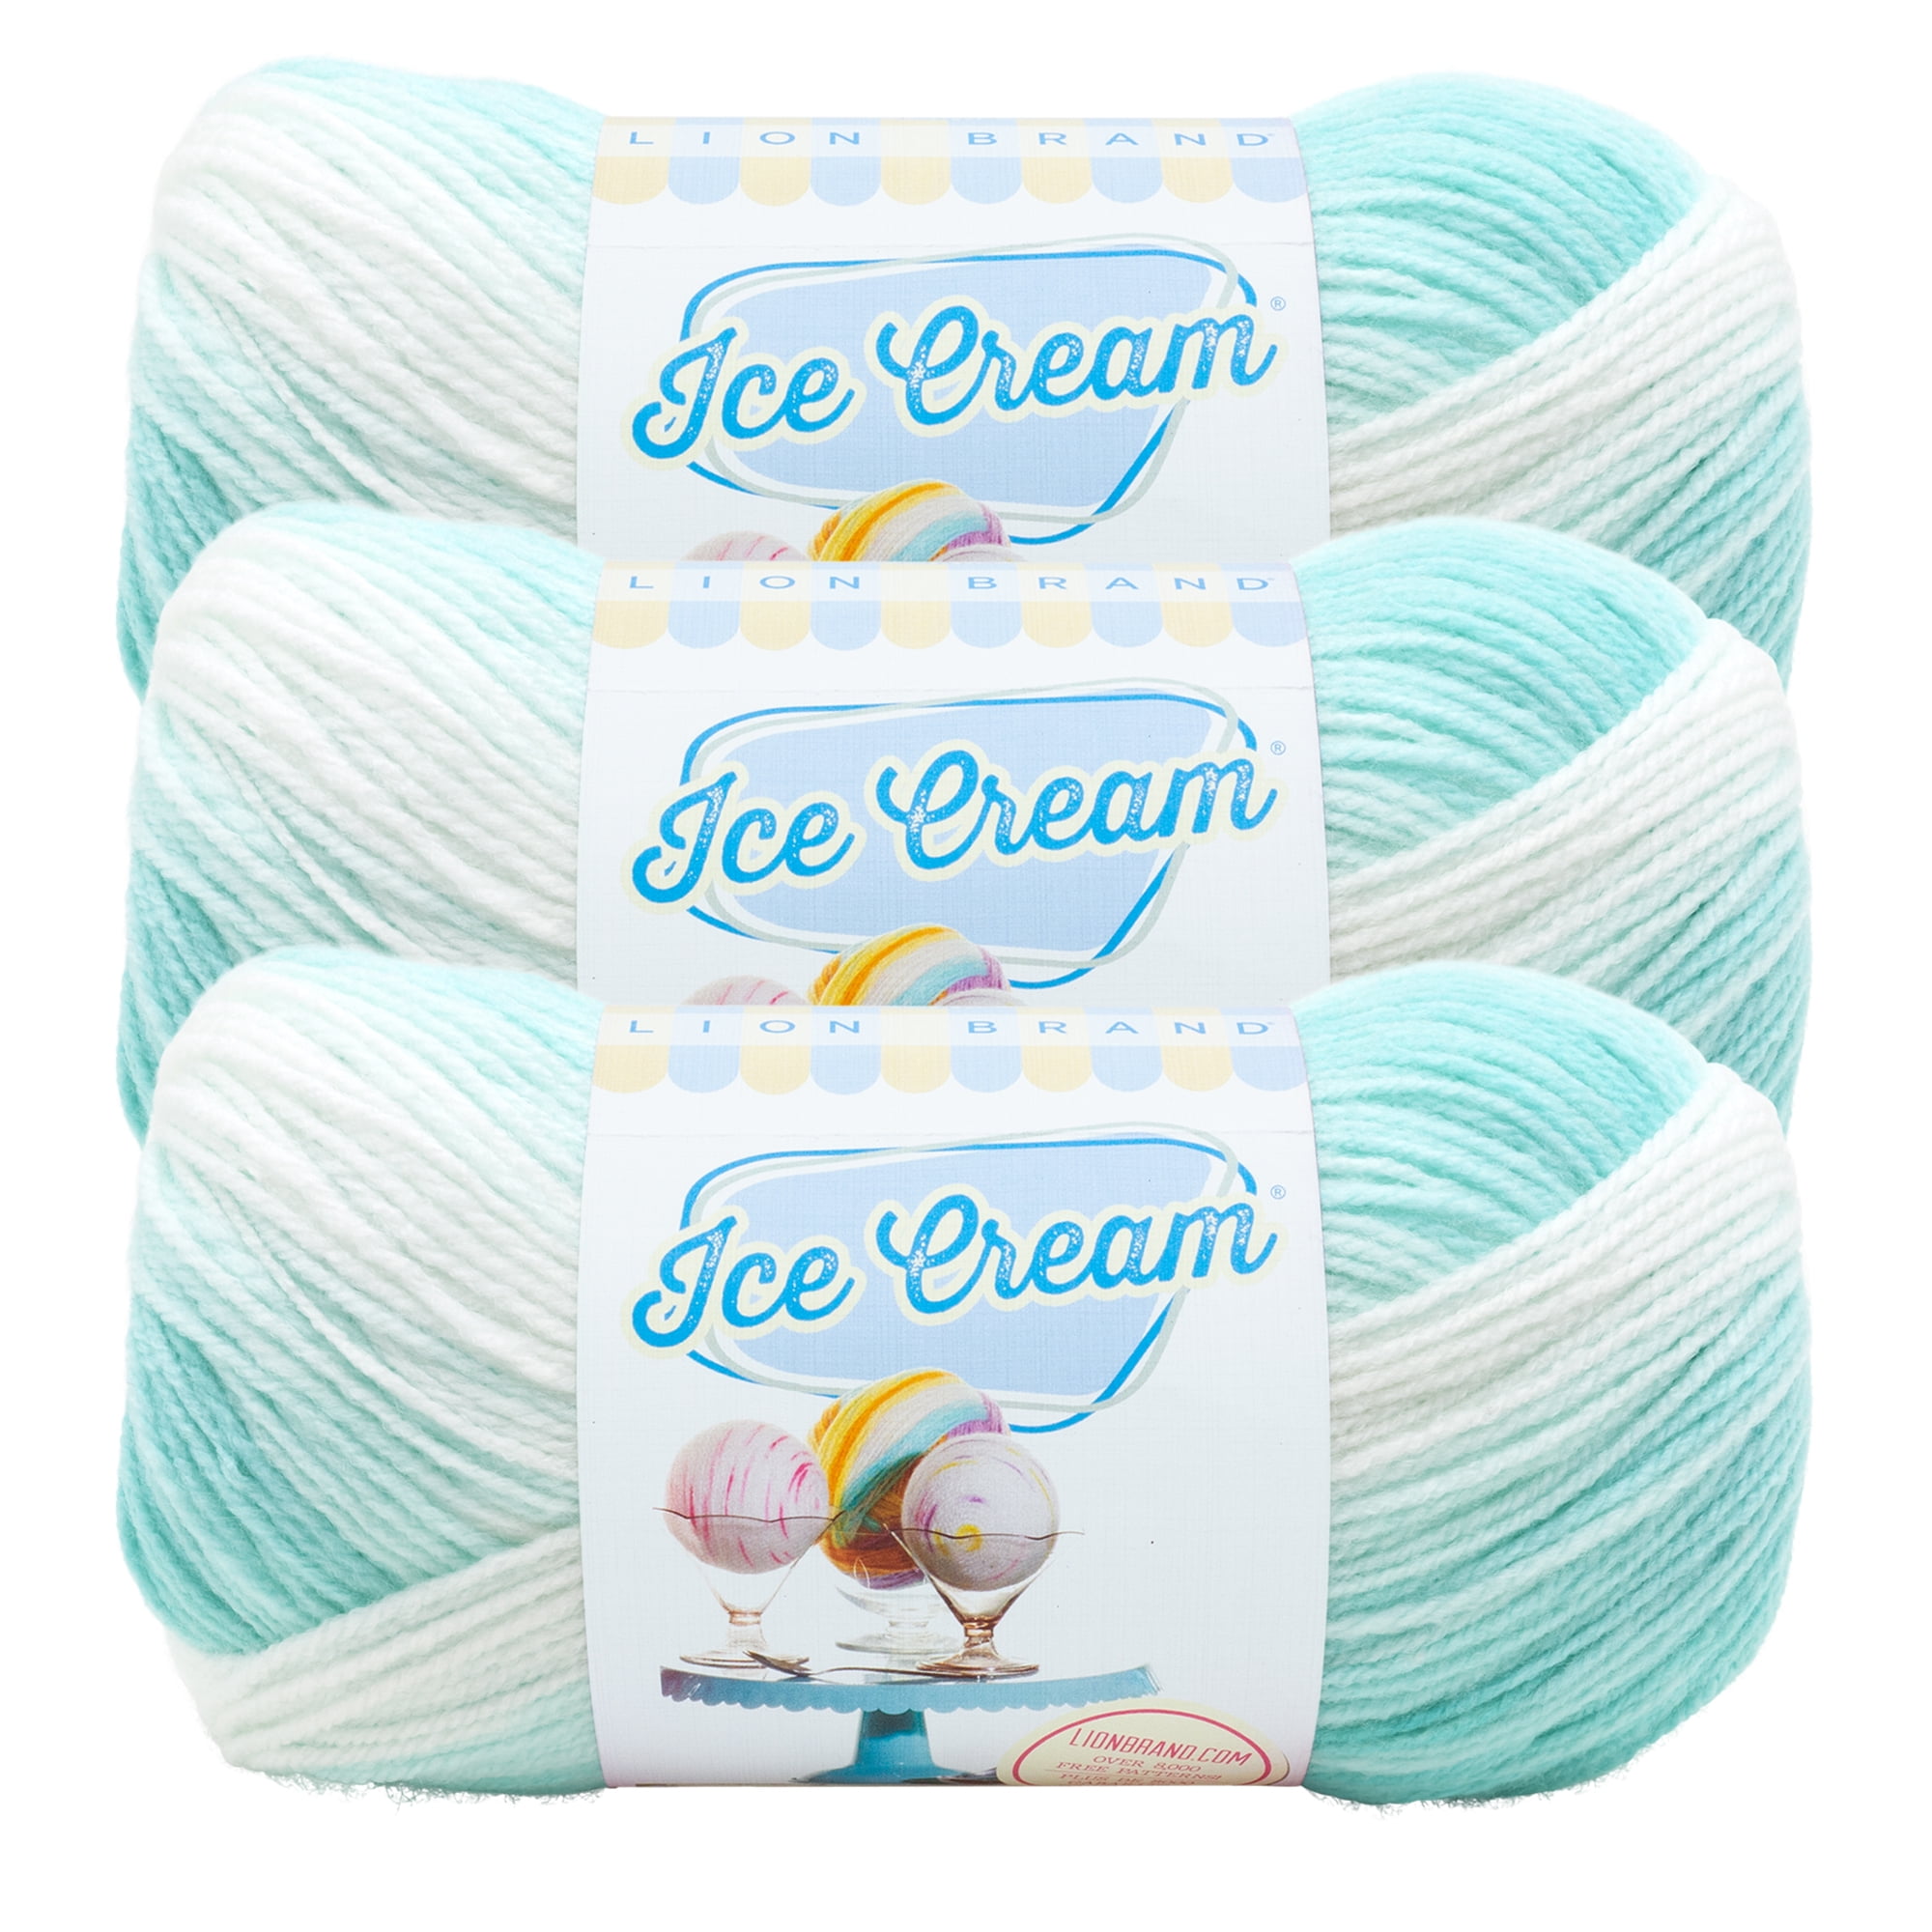  Lion Brand Ice Cream Bunny Tracks 923-224 (6-Skeins - Same Dye  Lot) Baby Sport #2 Acrylic Yarn for Crocheting and Knitting - Bundle with 1  Artsiga Crafts Project Bag